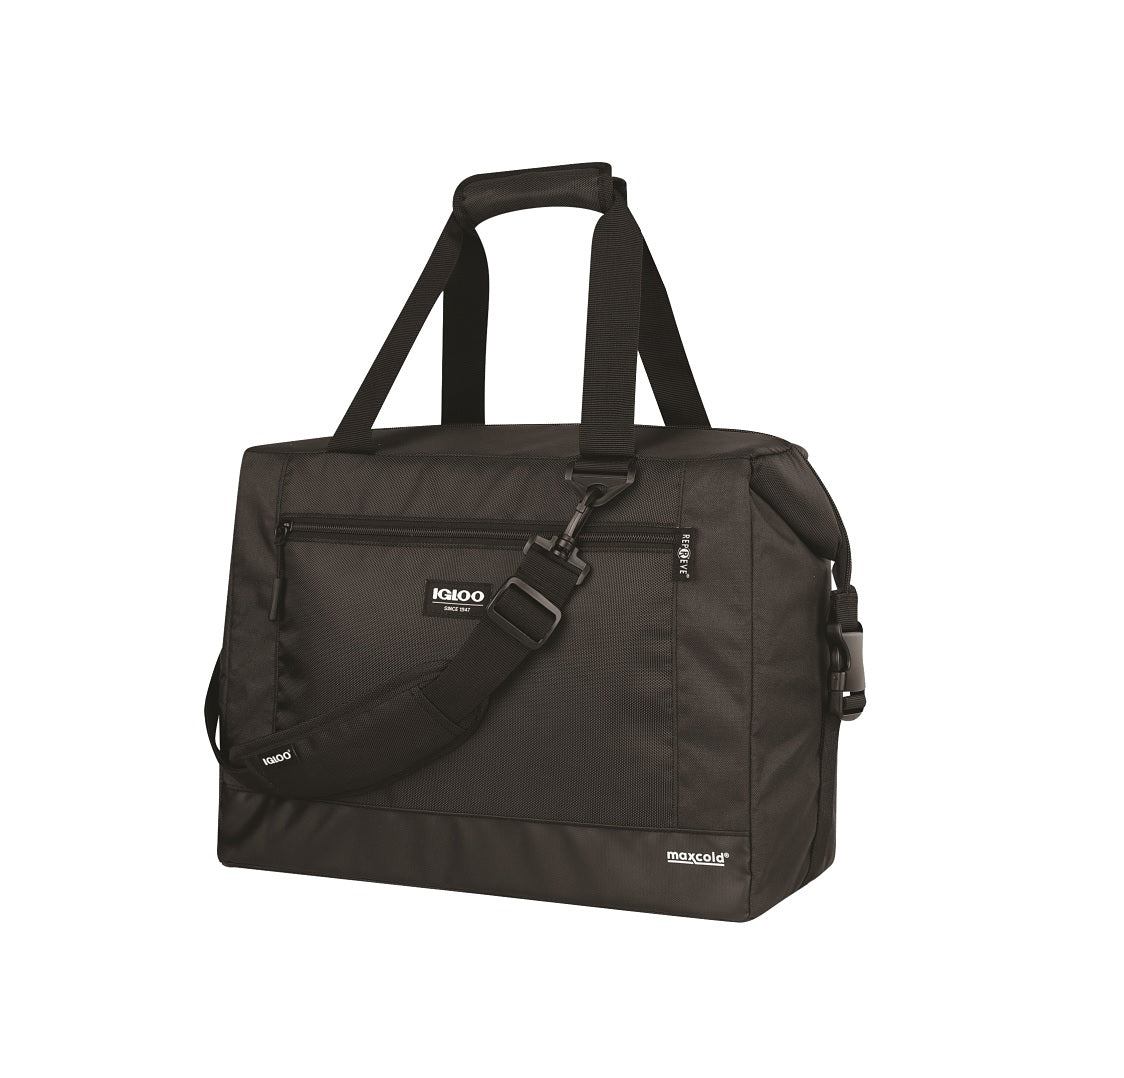 Igloo 66156 Cooler Bag, Foam/Fabric/Polyester, Black